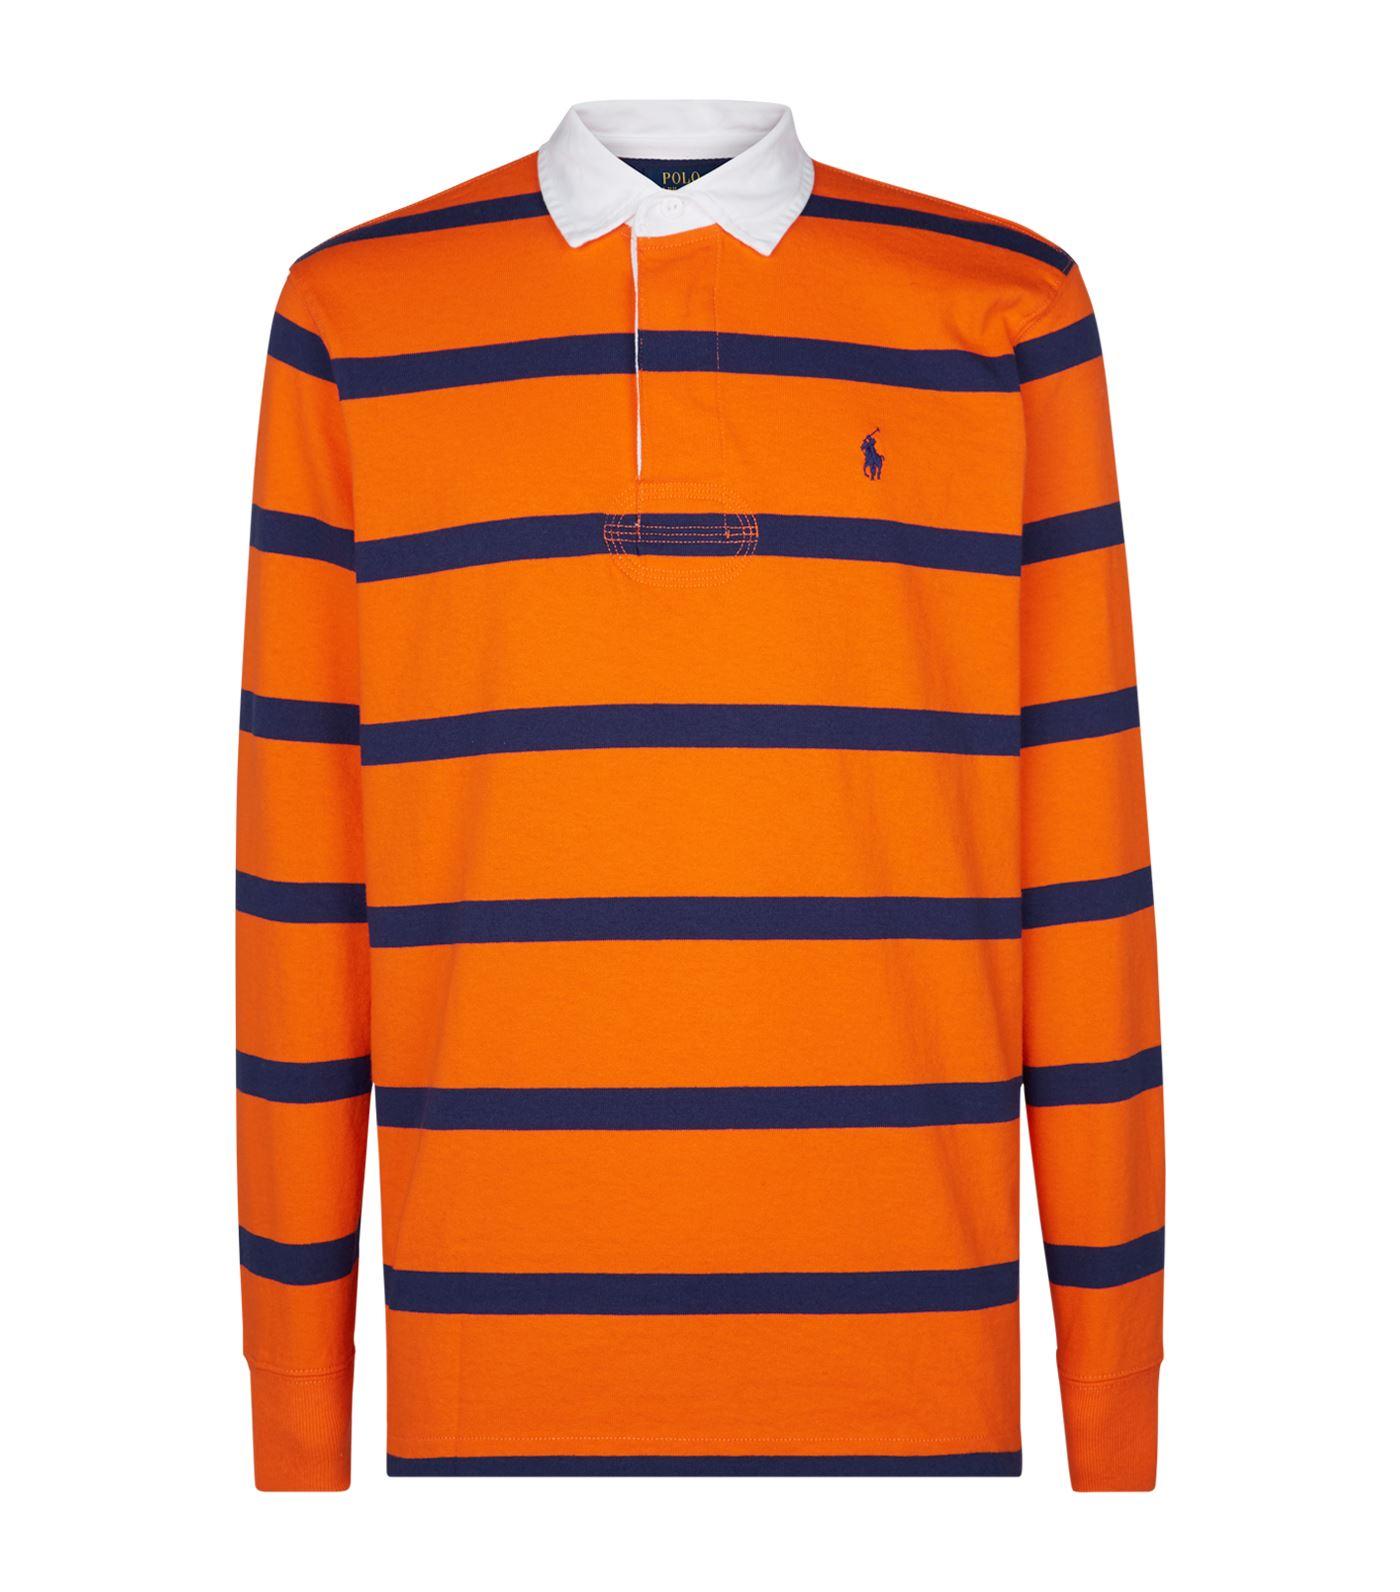 Polo Ralph Lauren Cotton Striped Polo Shirt in Orange for Men - Lyst